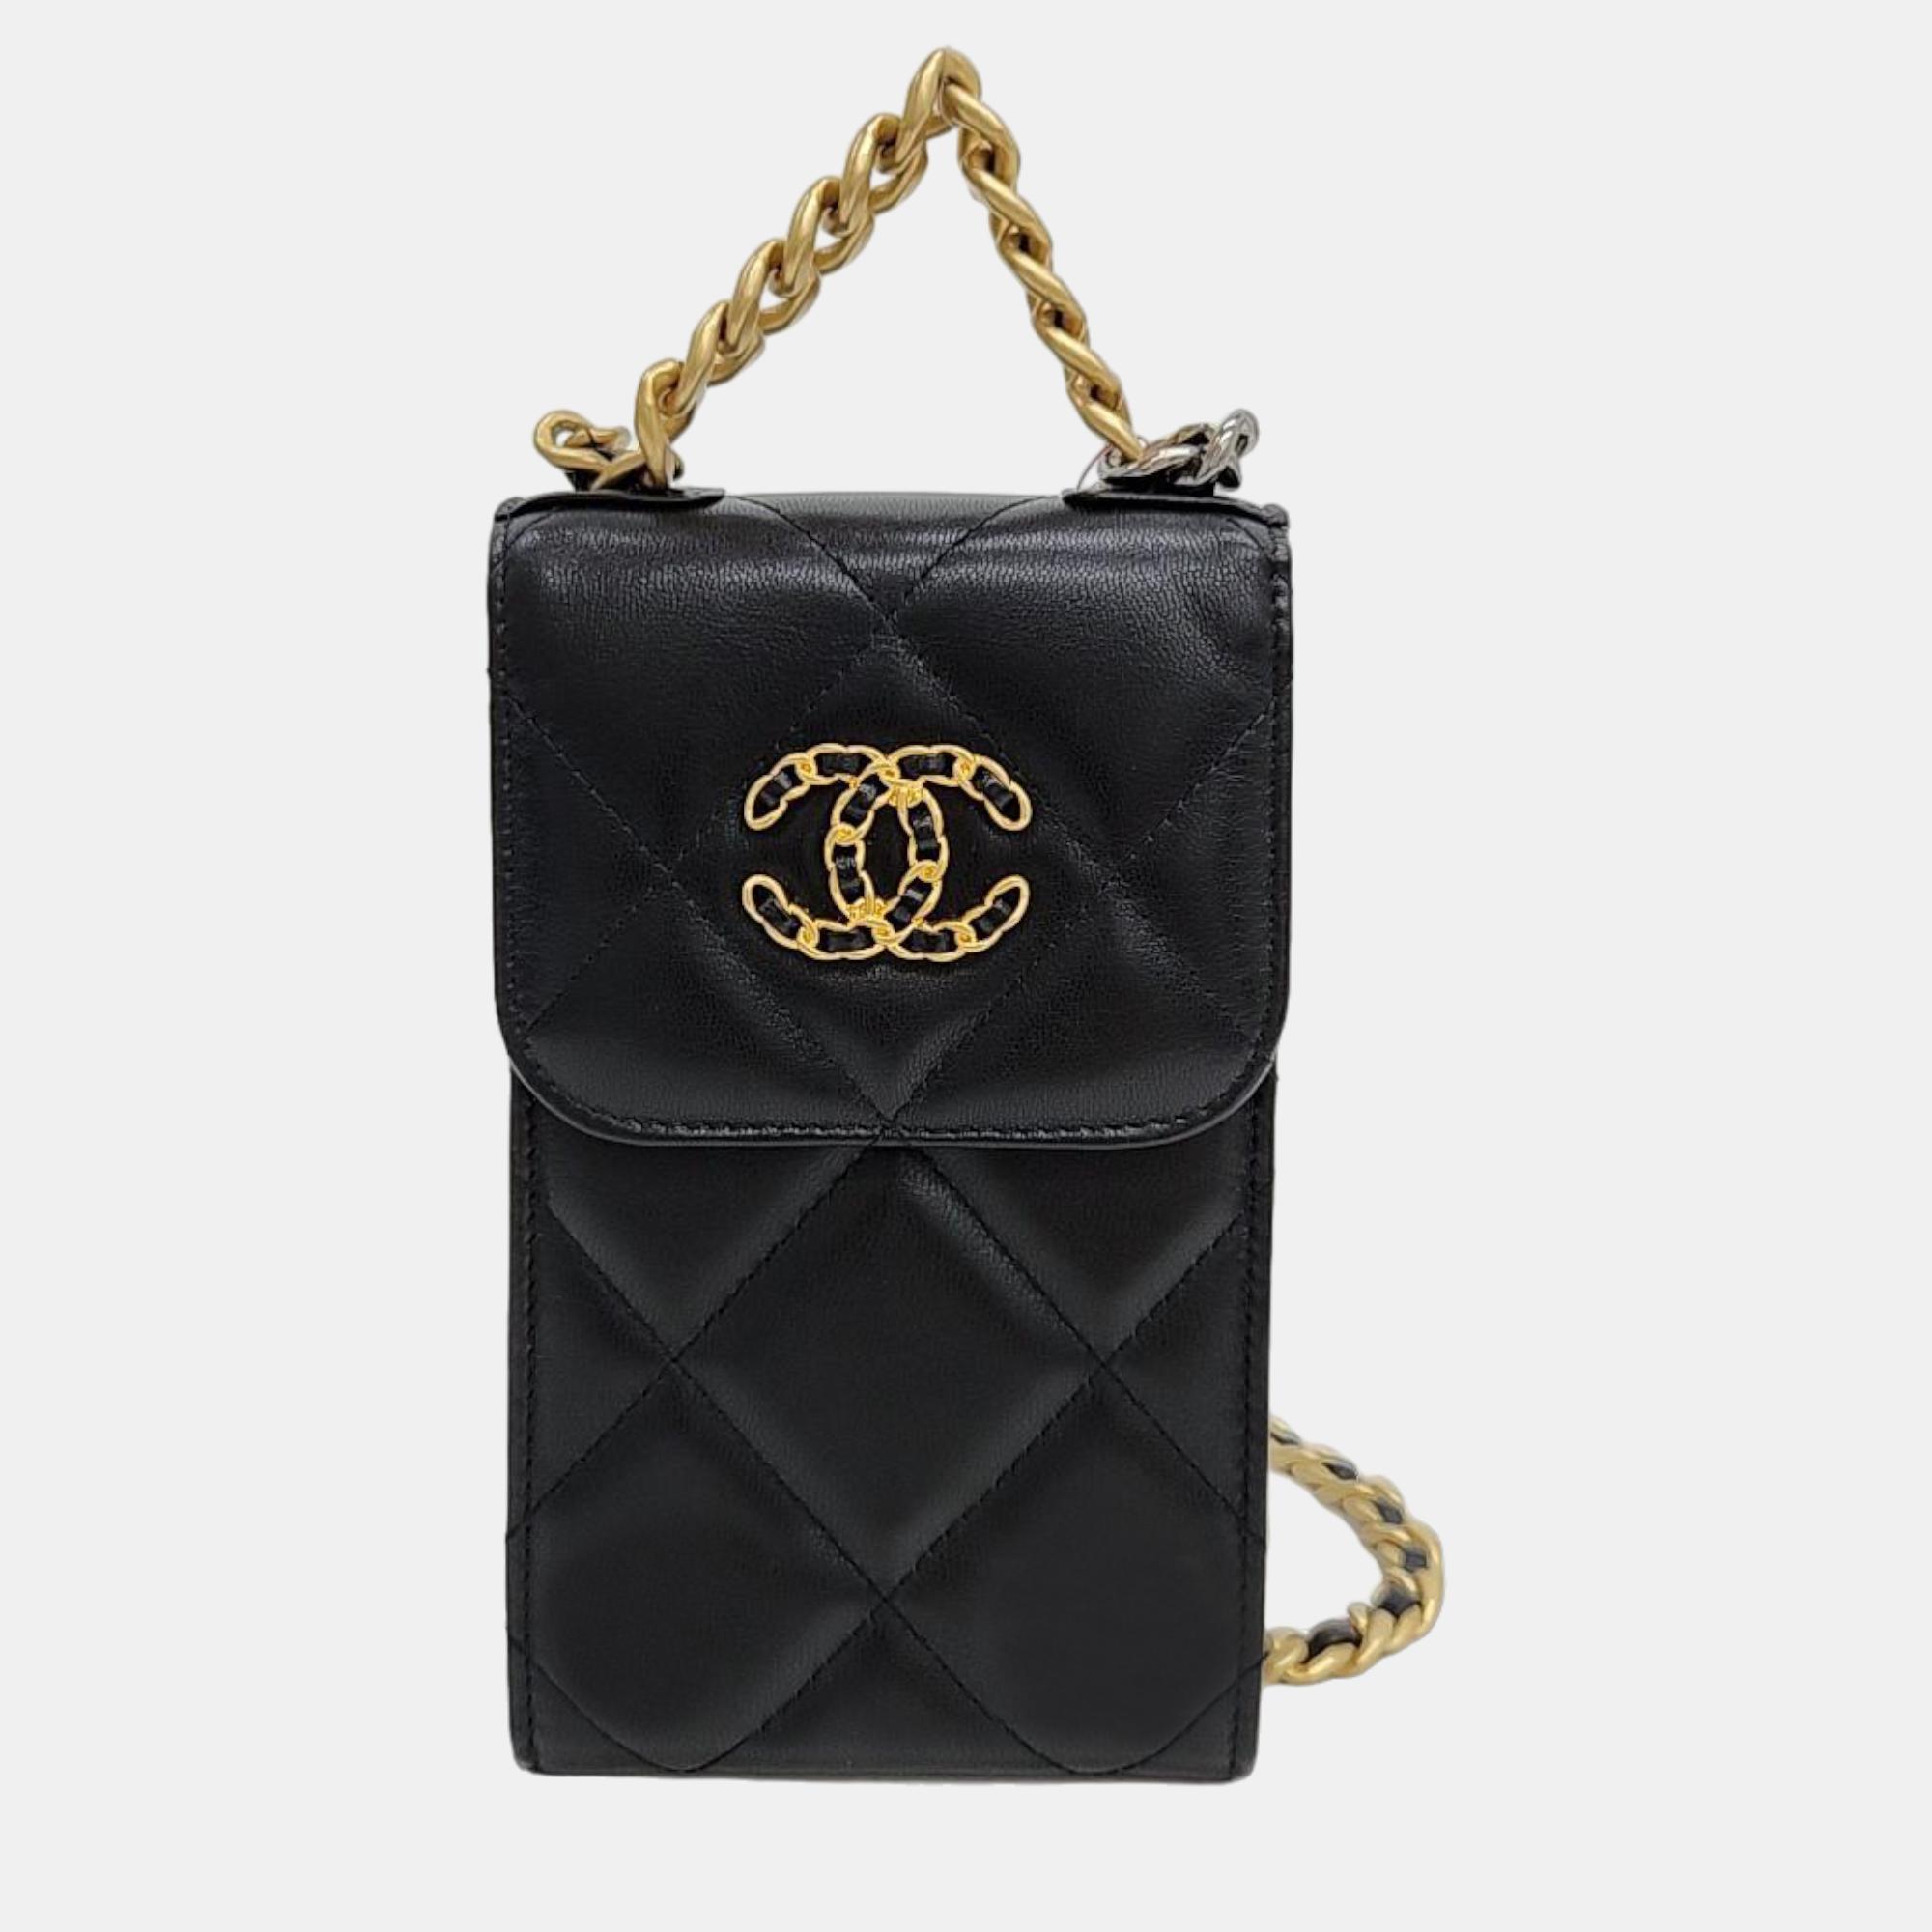 Chanel Black Leather 19 Phone Holder Flap Bag